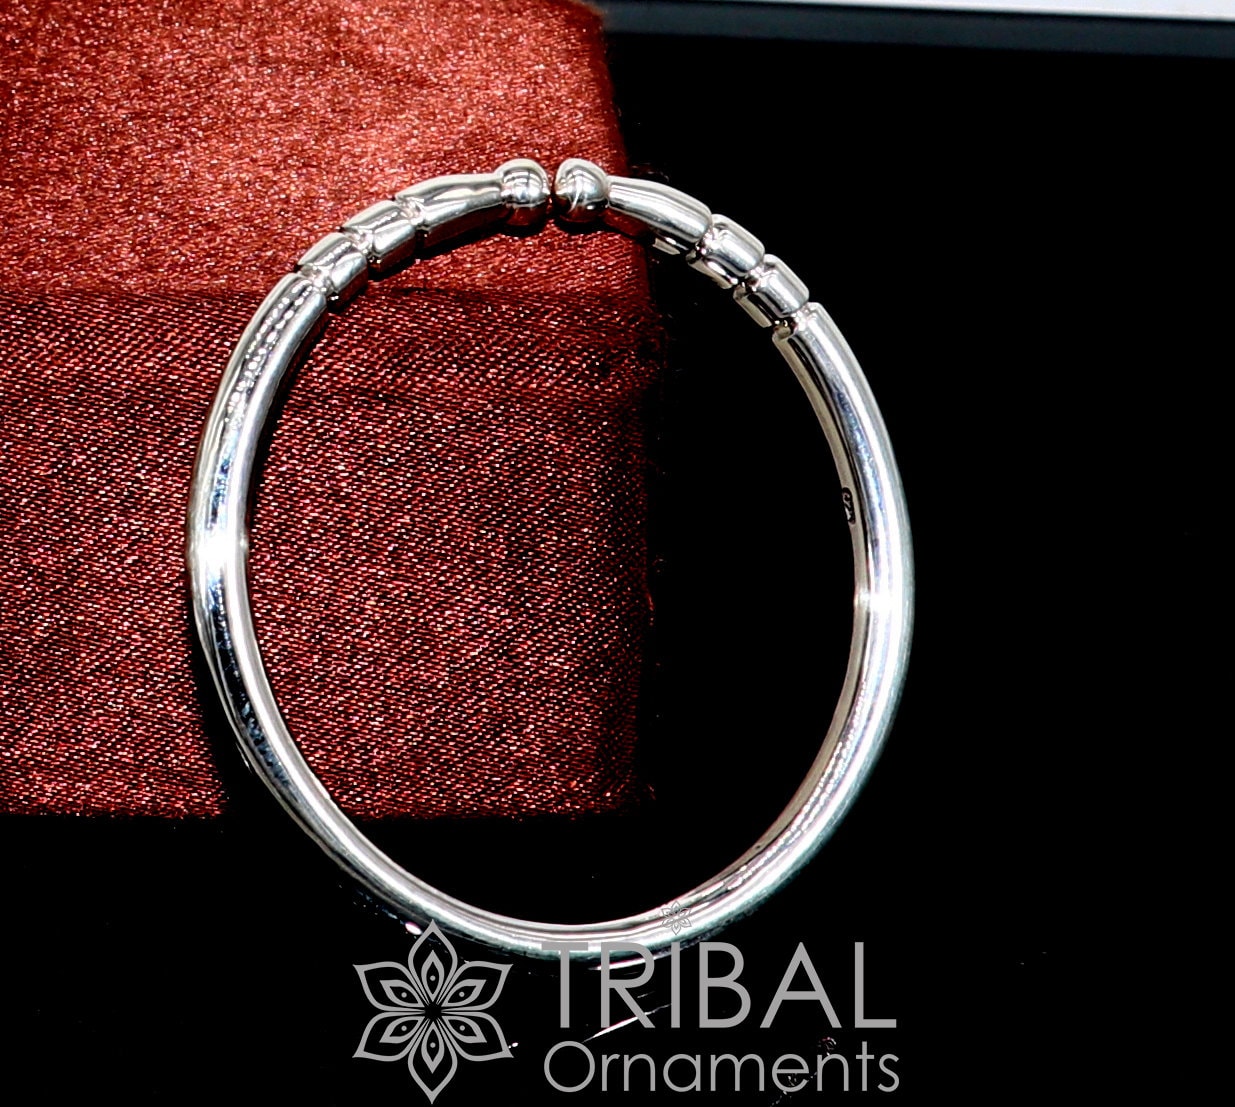 4mm 925 Solid sterling silver handmade plain shiny kids bangle bracelet adjustable baby kada, best Modern trendy gift for unisex nsk687 - TRIBAL ORNAMENTS